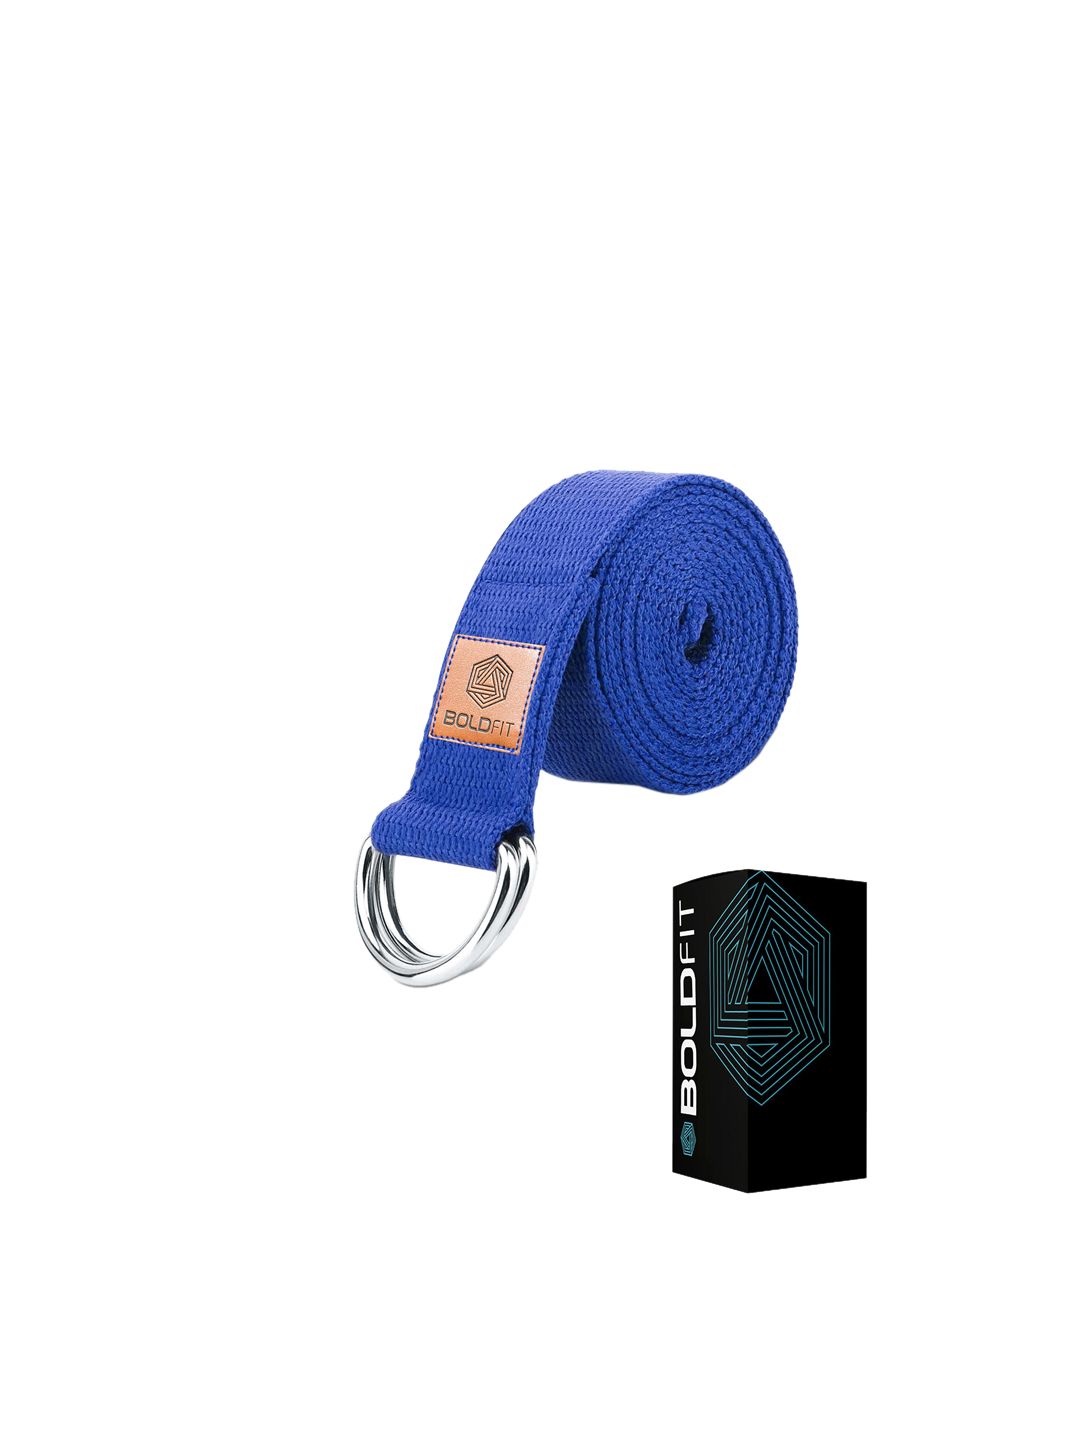 BOLDFIT Blue Solid Yoga Belt Price in India